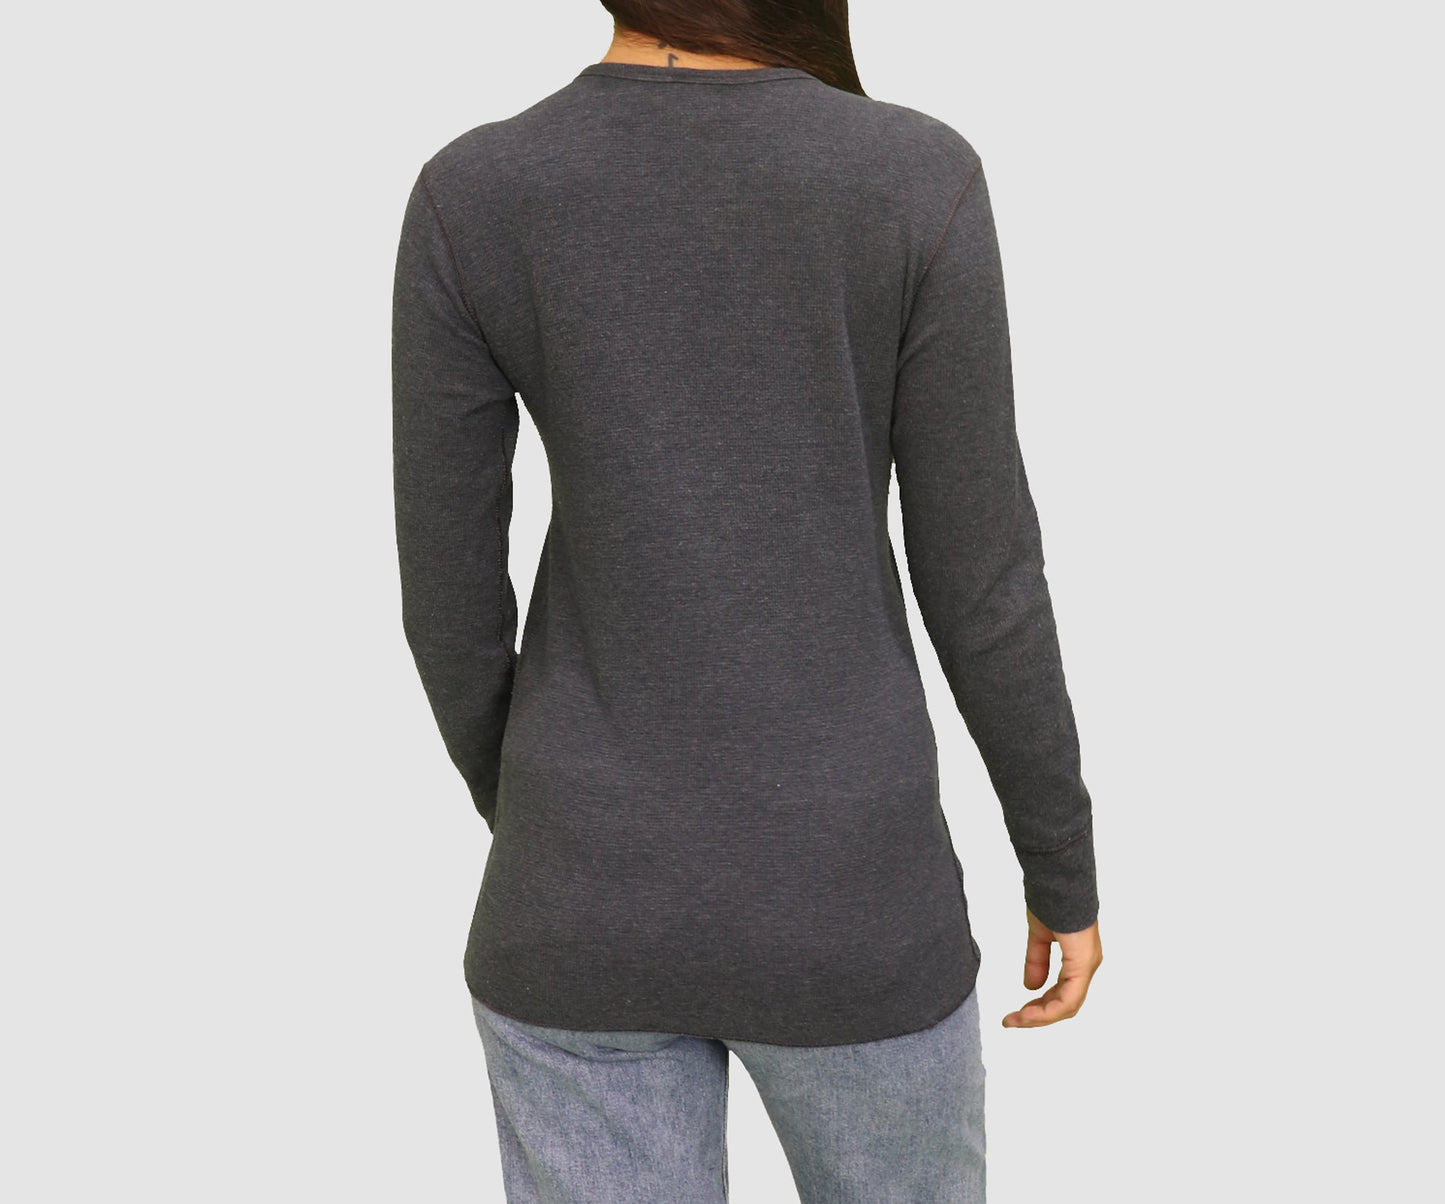 CI SPORT Womens Tops Large / Grey Long Sleeve Top